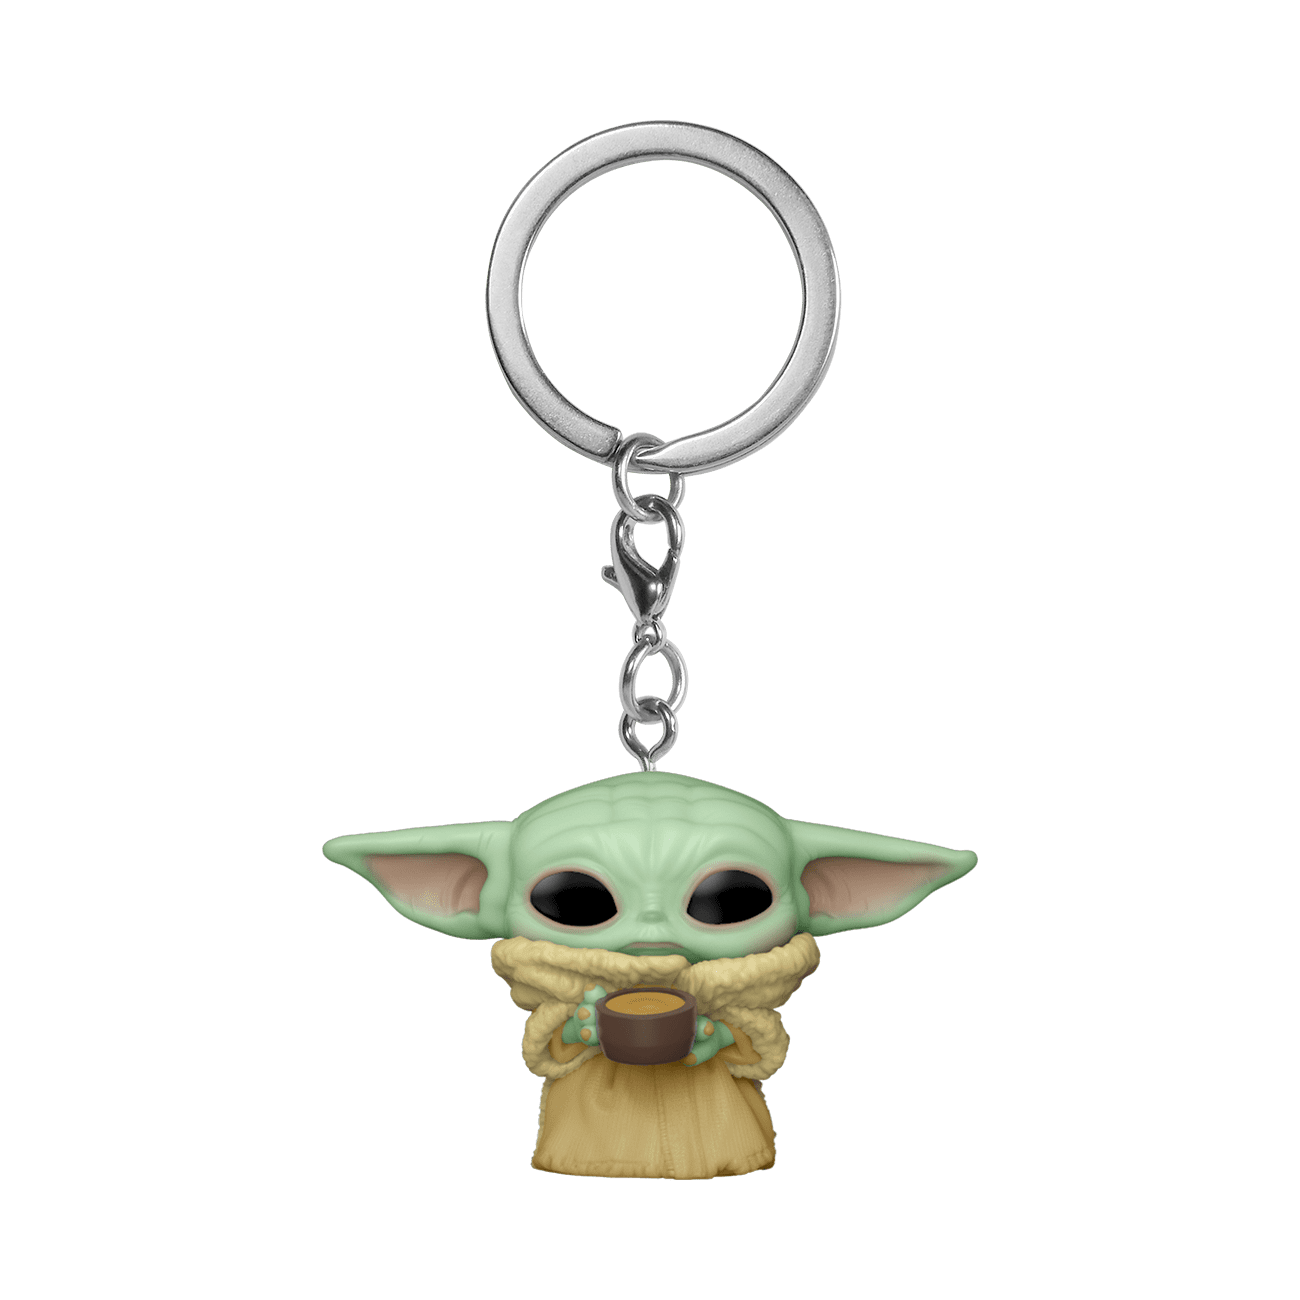 Details about   Disney Baby Yoda Keychain Cartoon Mandalorian Figure Star Wars Action Figure